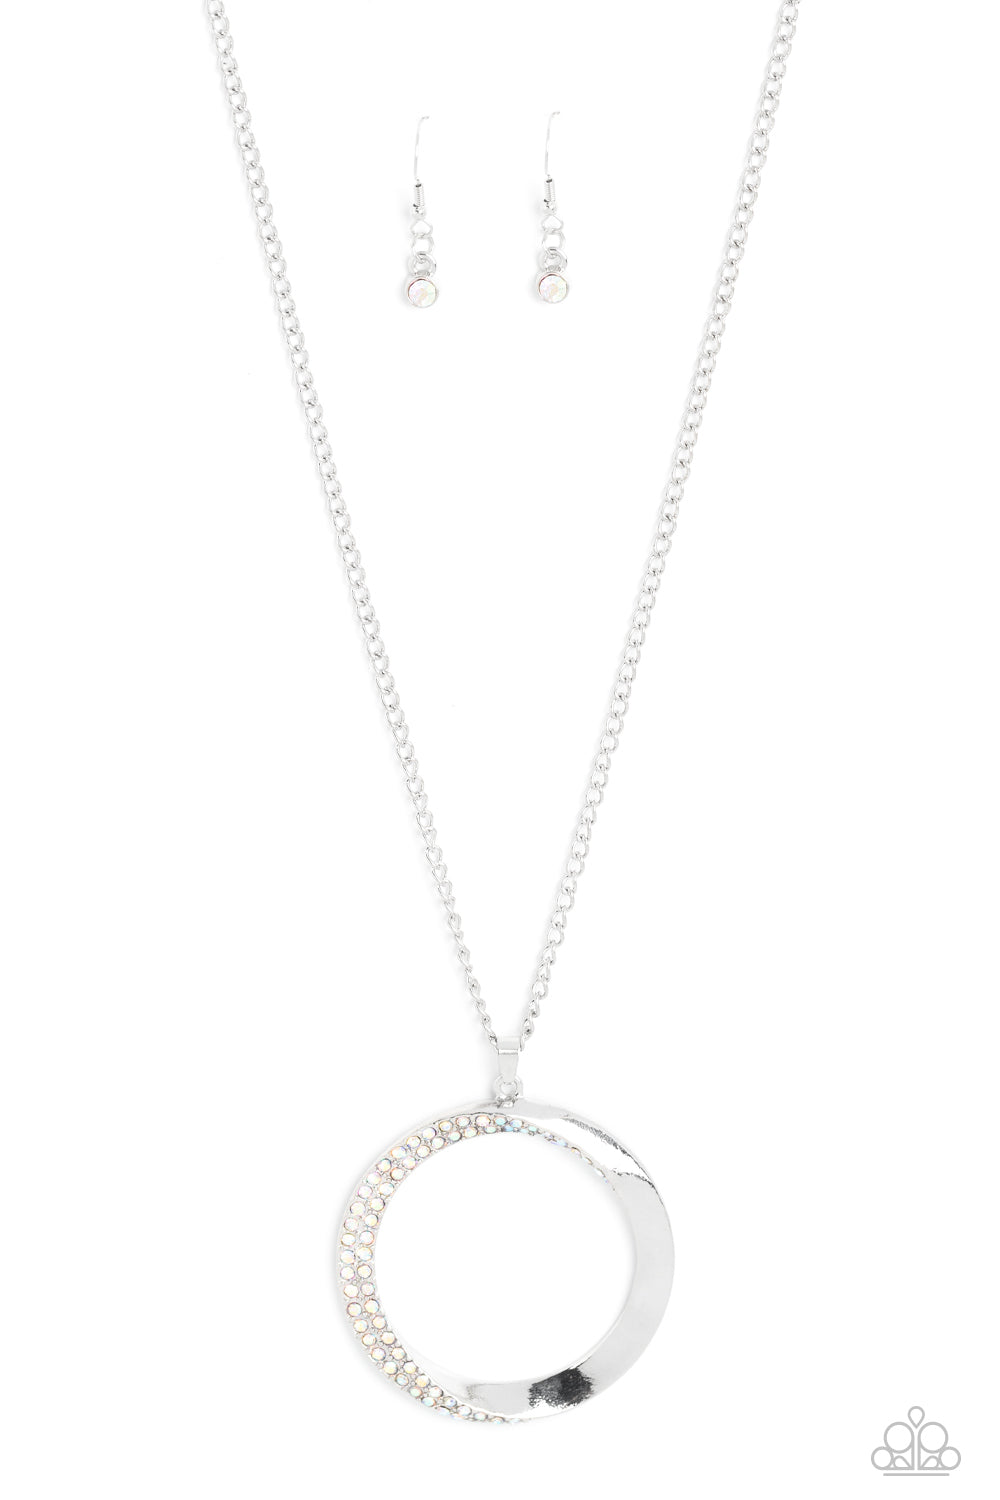 Encrusted Elegance Multi Necklace & Bracelet Set - Paparazzi Accessories